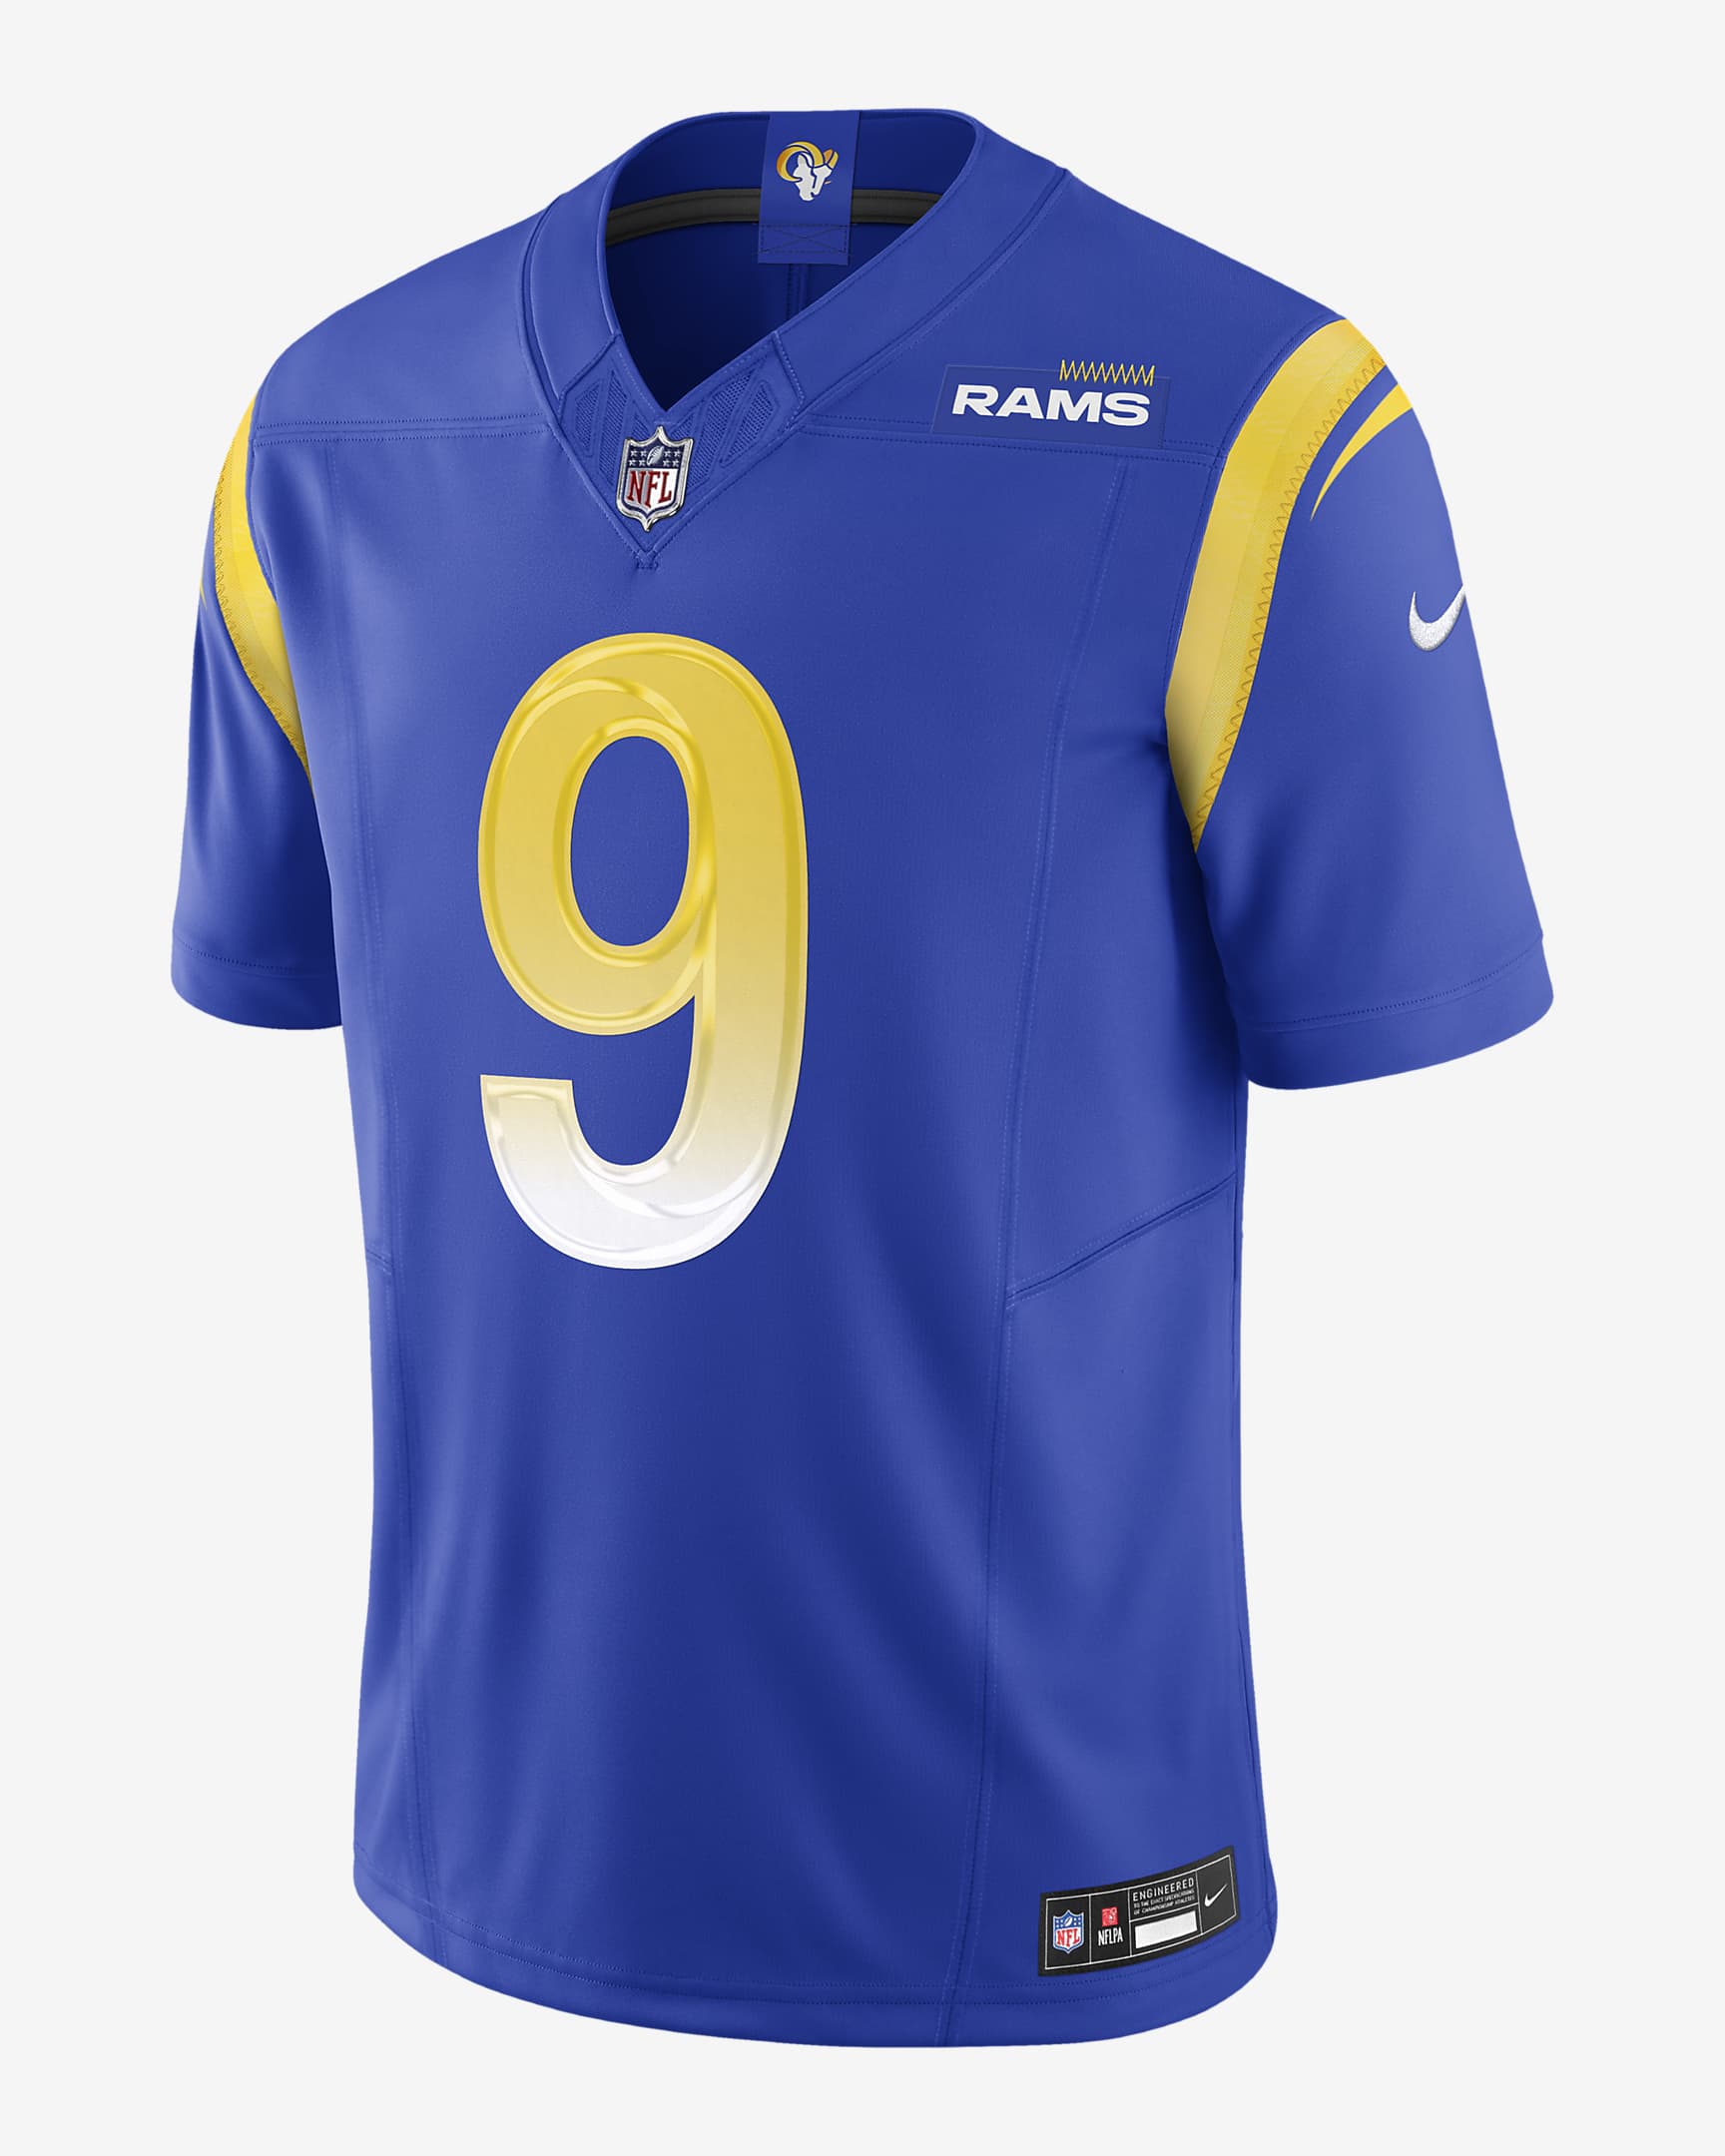 Matthew Stafford Los Angeles Rams Men's Nike Dri-FIT NFL Limited Football Jersey - Royal